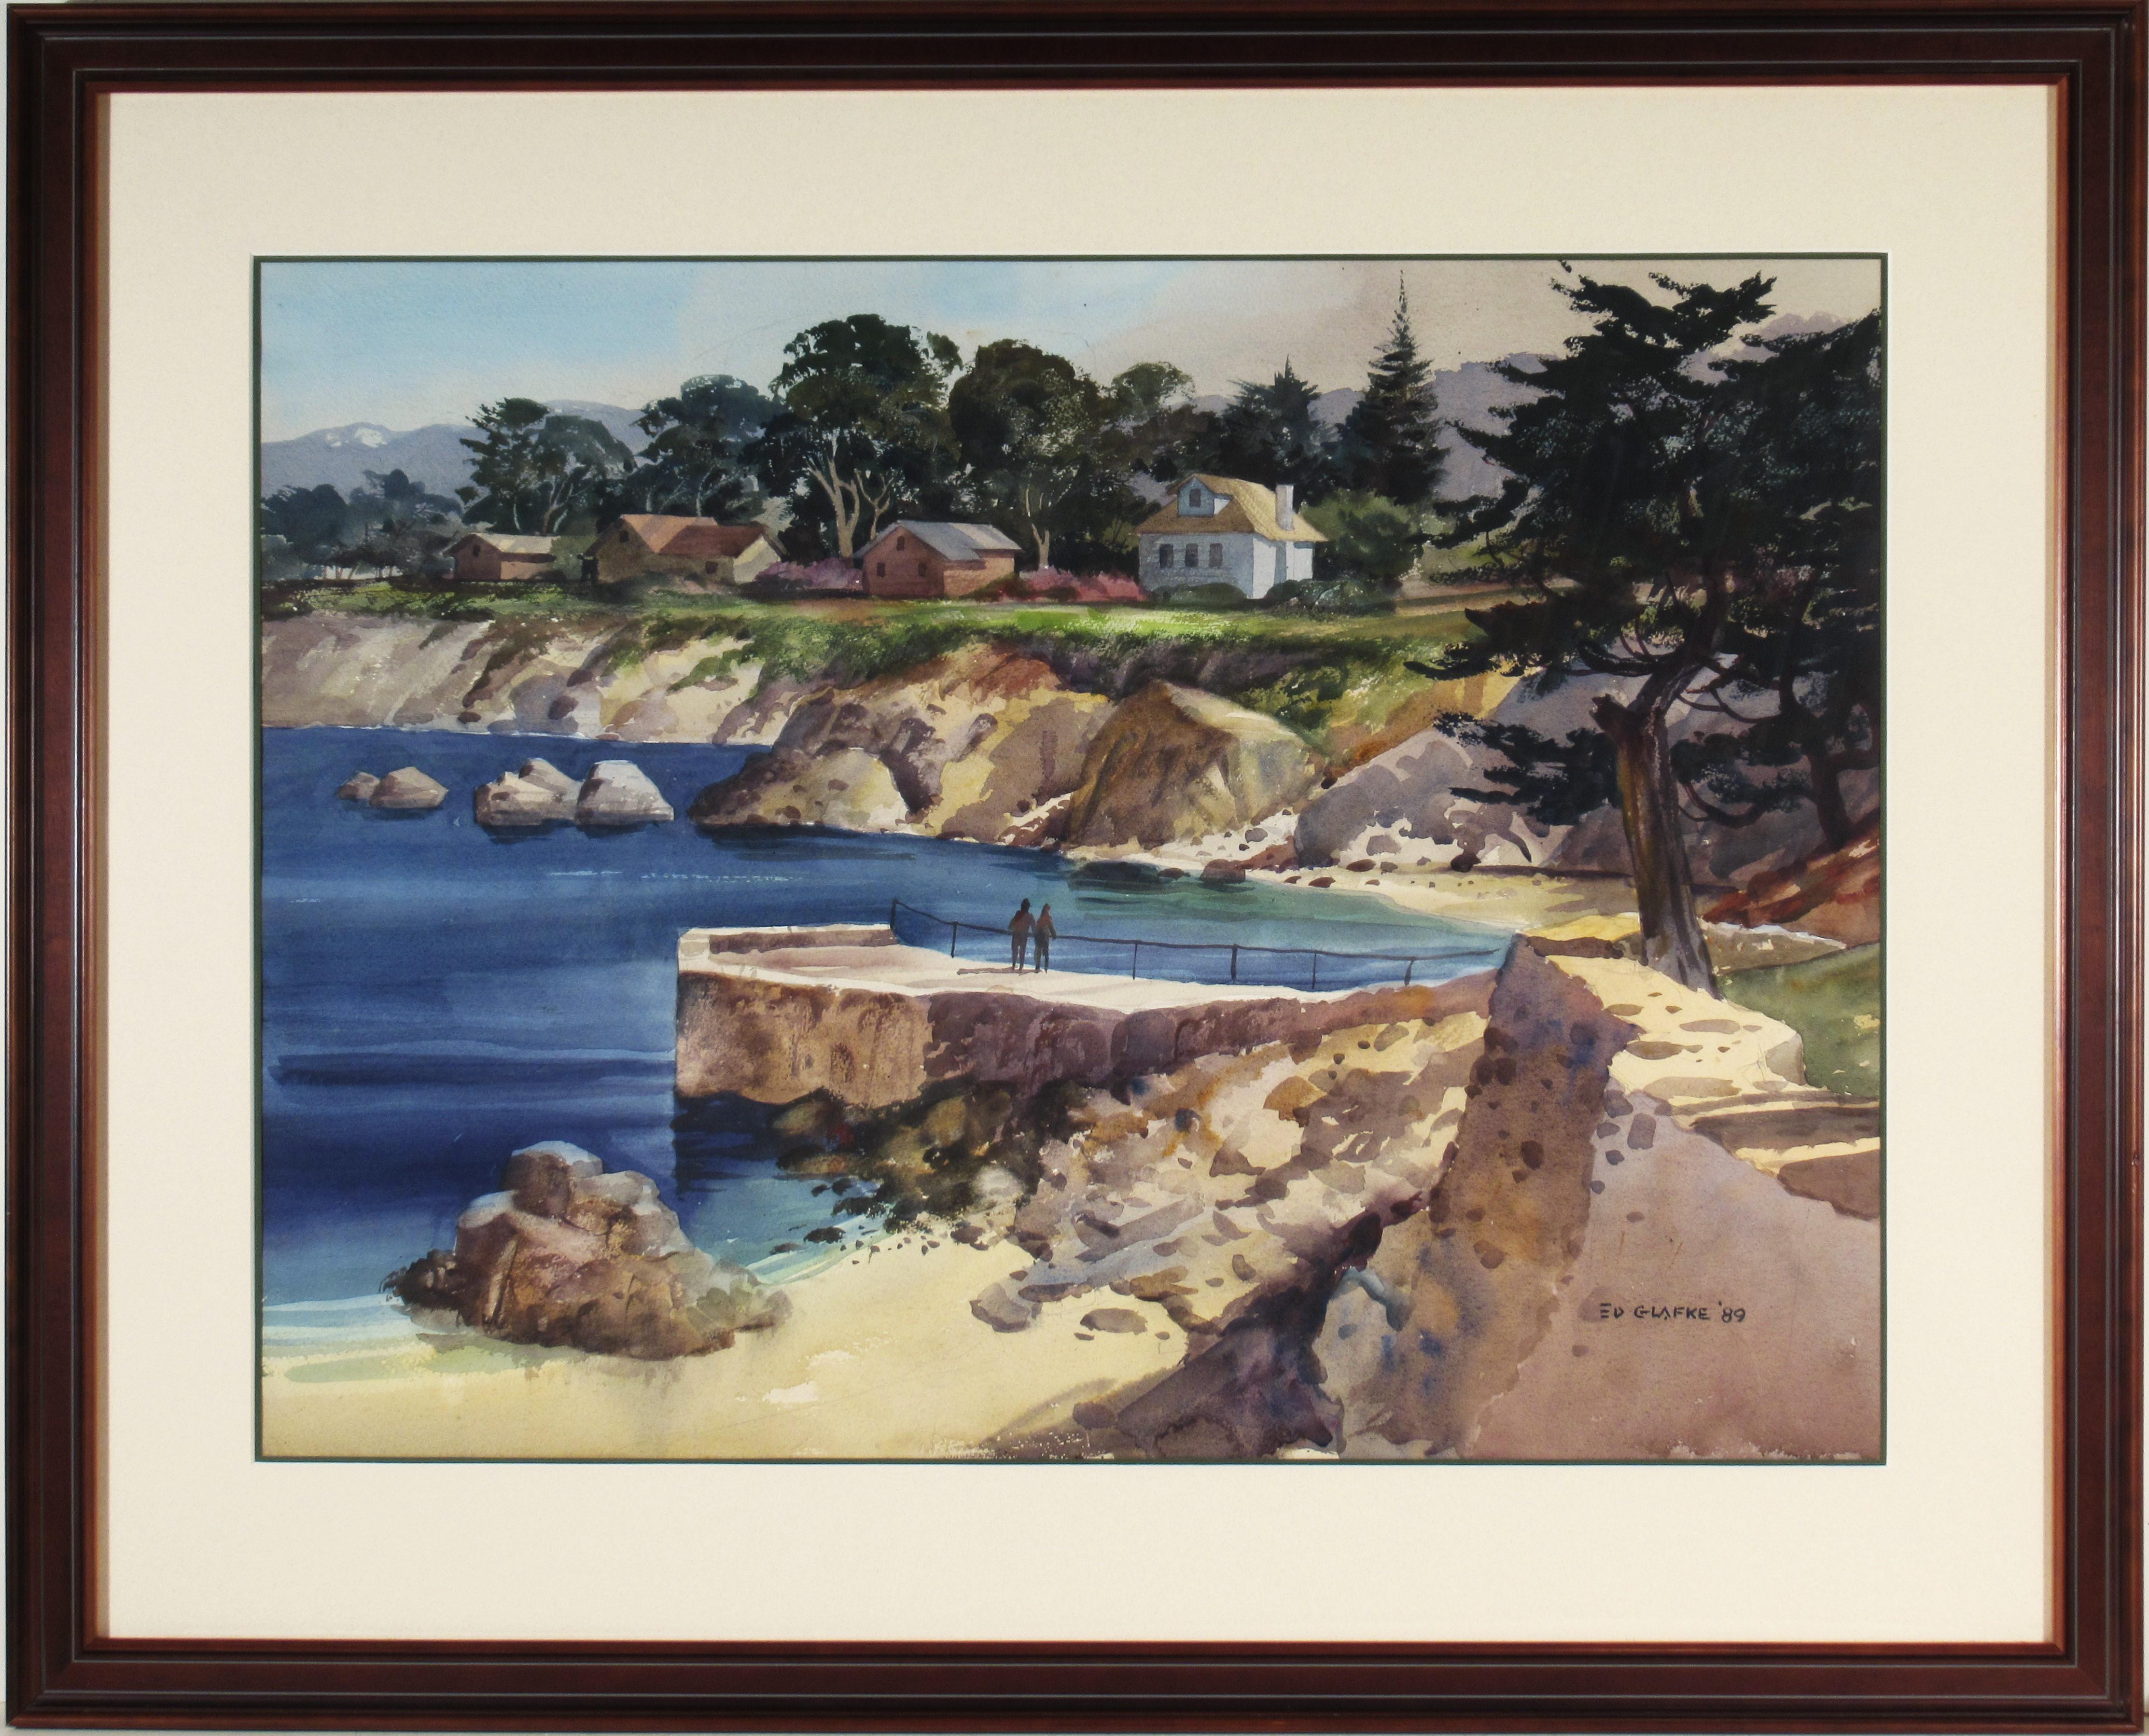 Edward Glafke Landscape Art - "Sea Shore Near Carmel, Carmel California" Large watercolor